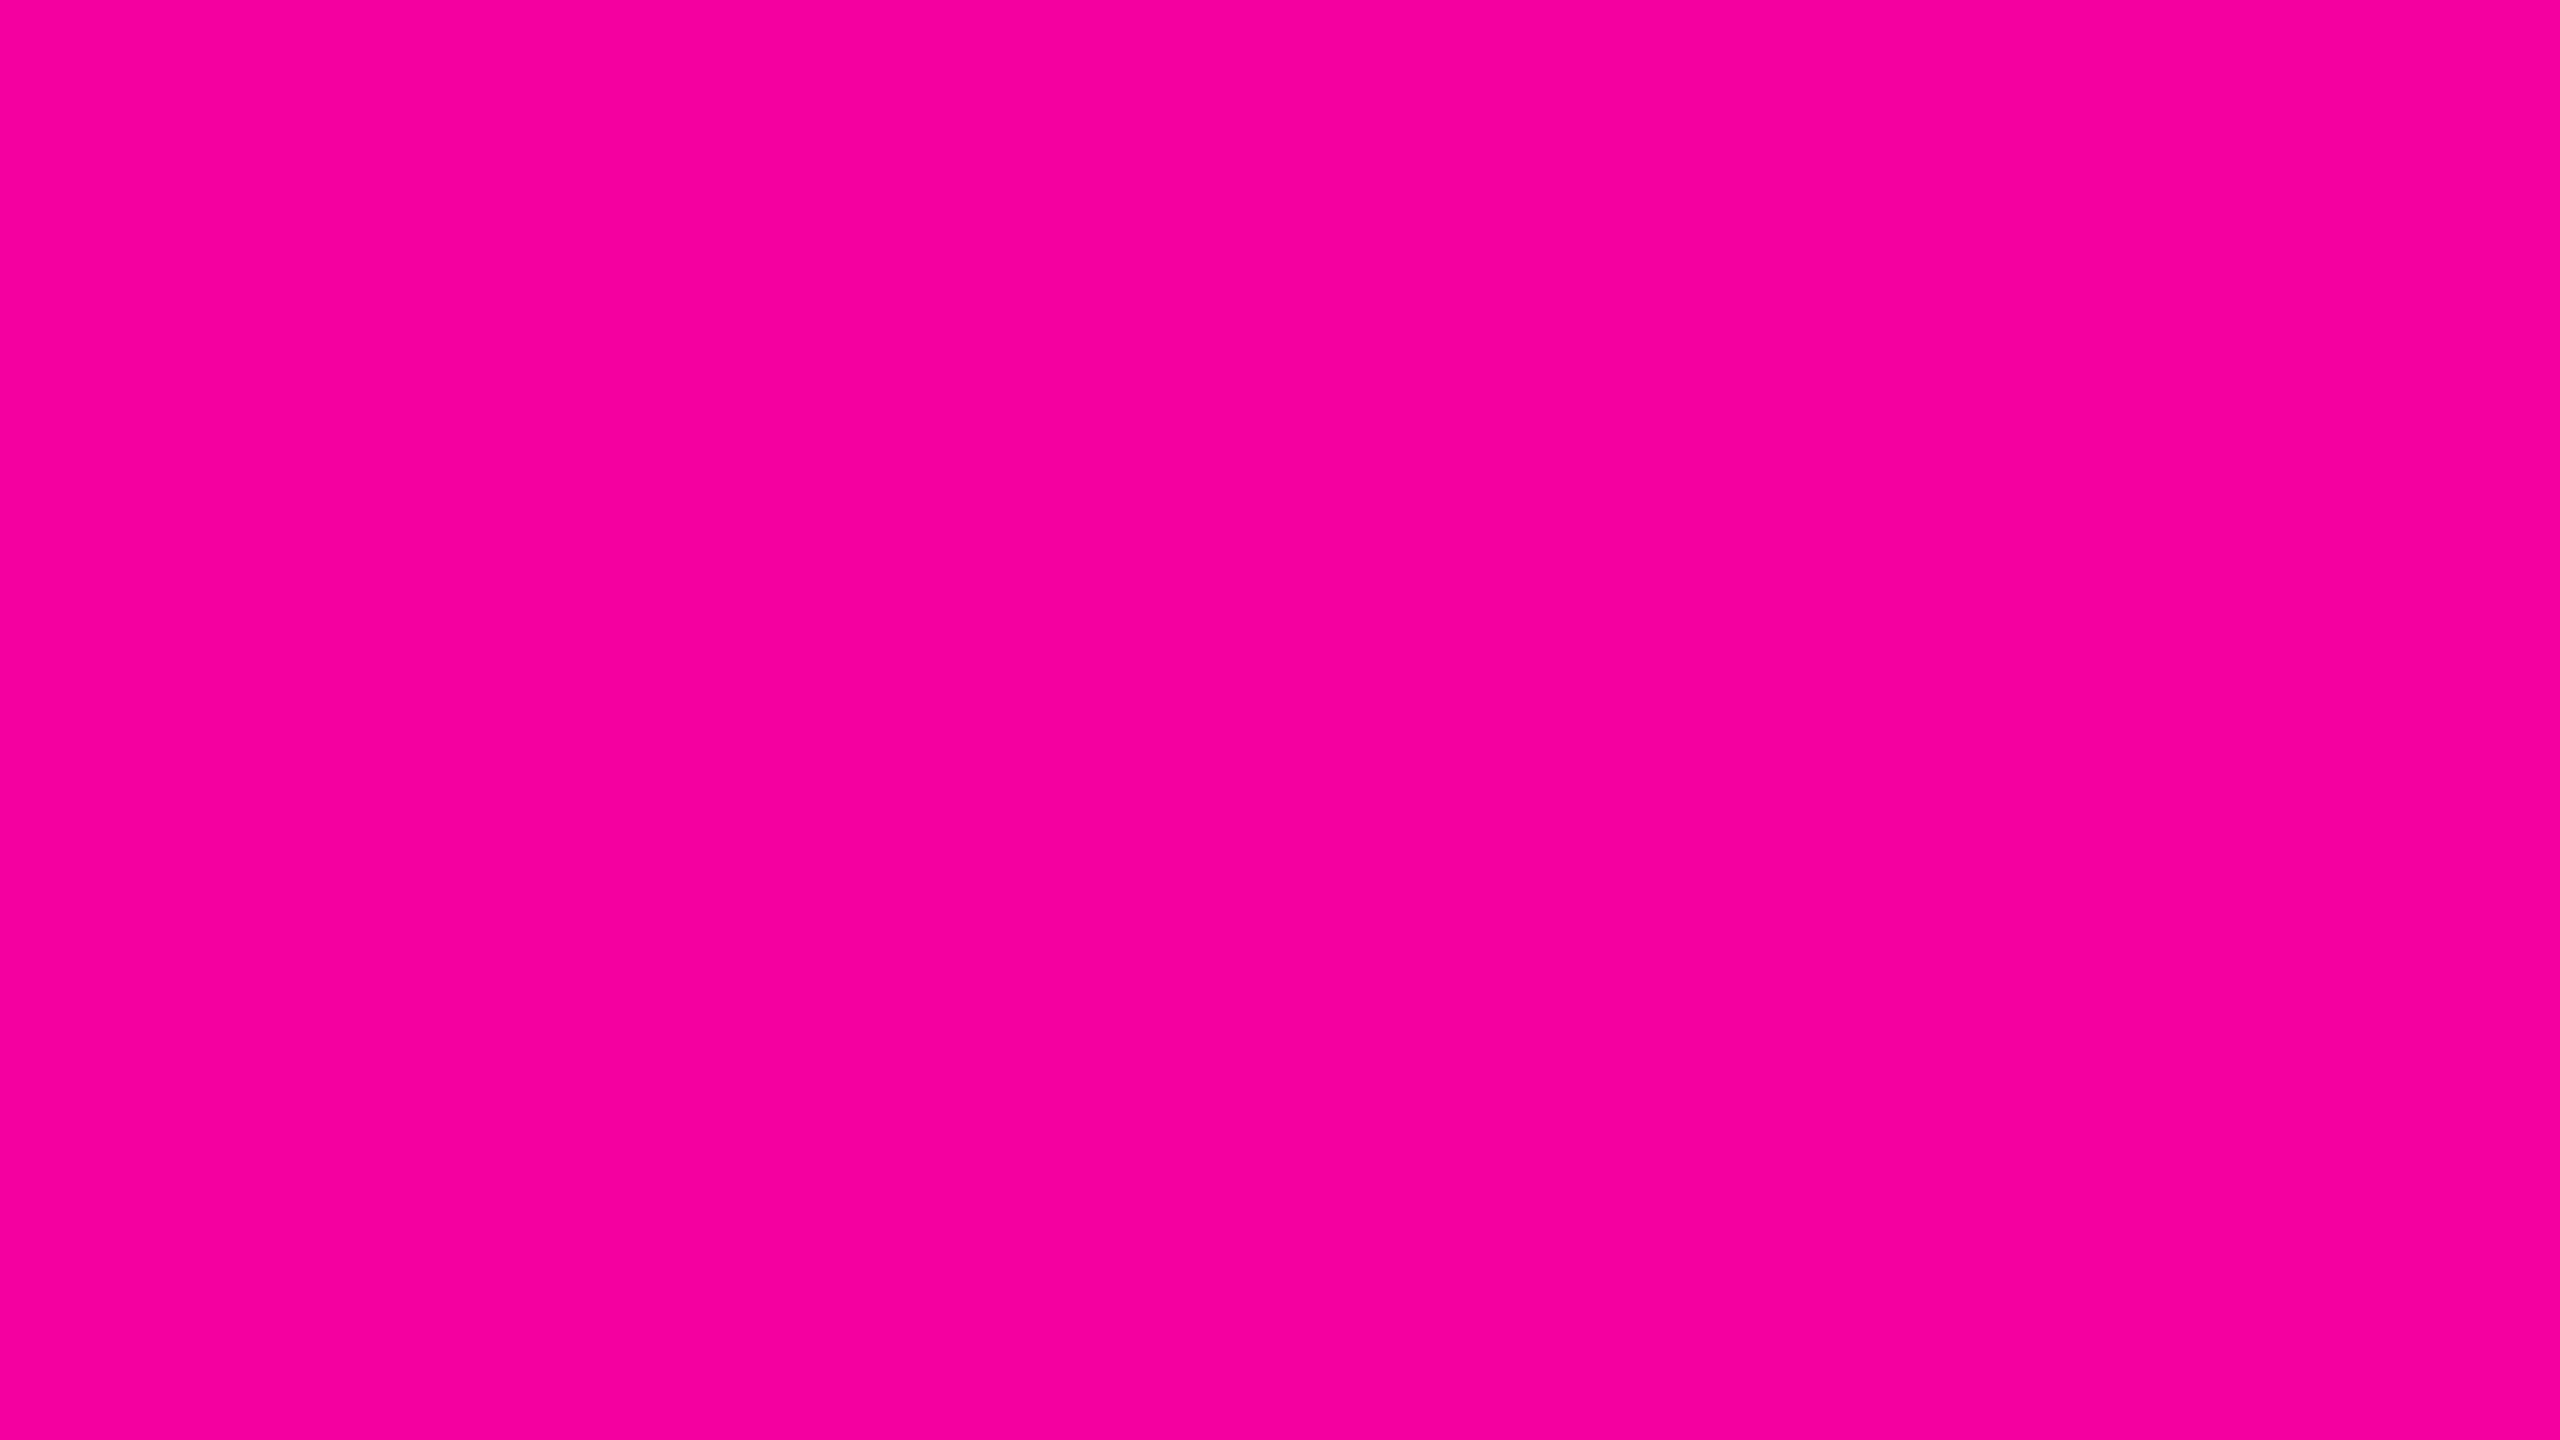 2560x1440 Fashion Fuchsia Solid Color Background